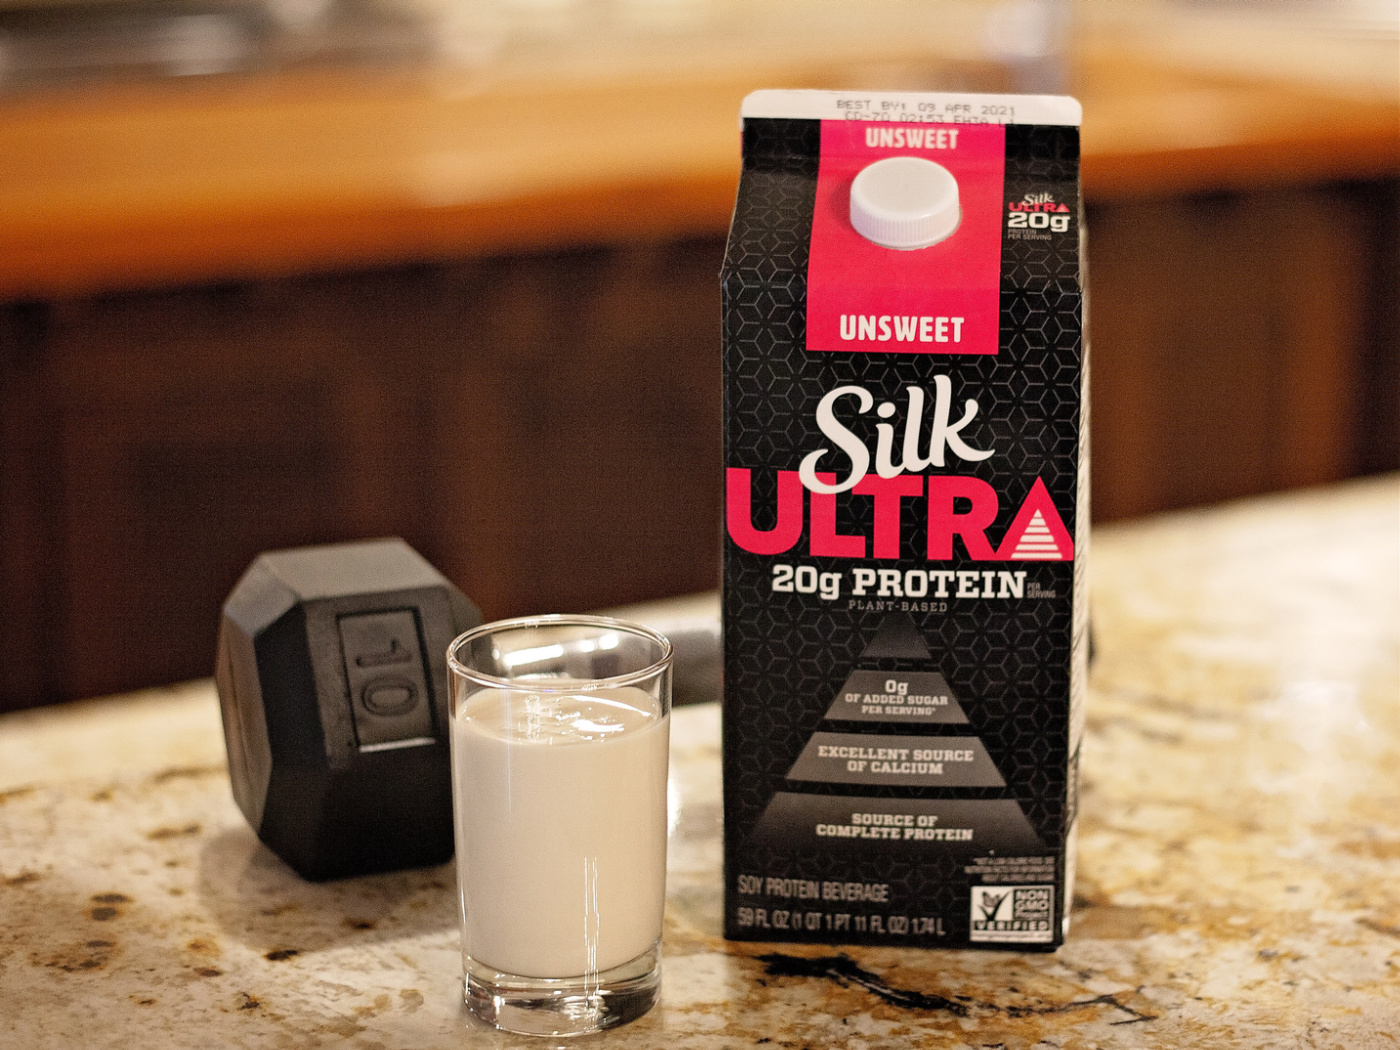 Silk Ultra Digital Coupon - Save At Publix on I Heart Publix